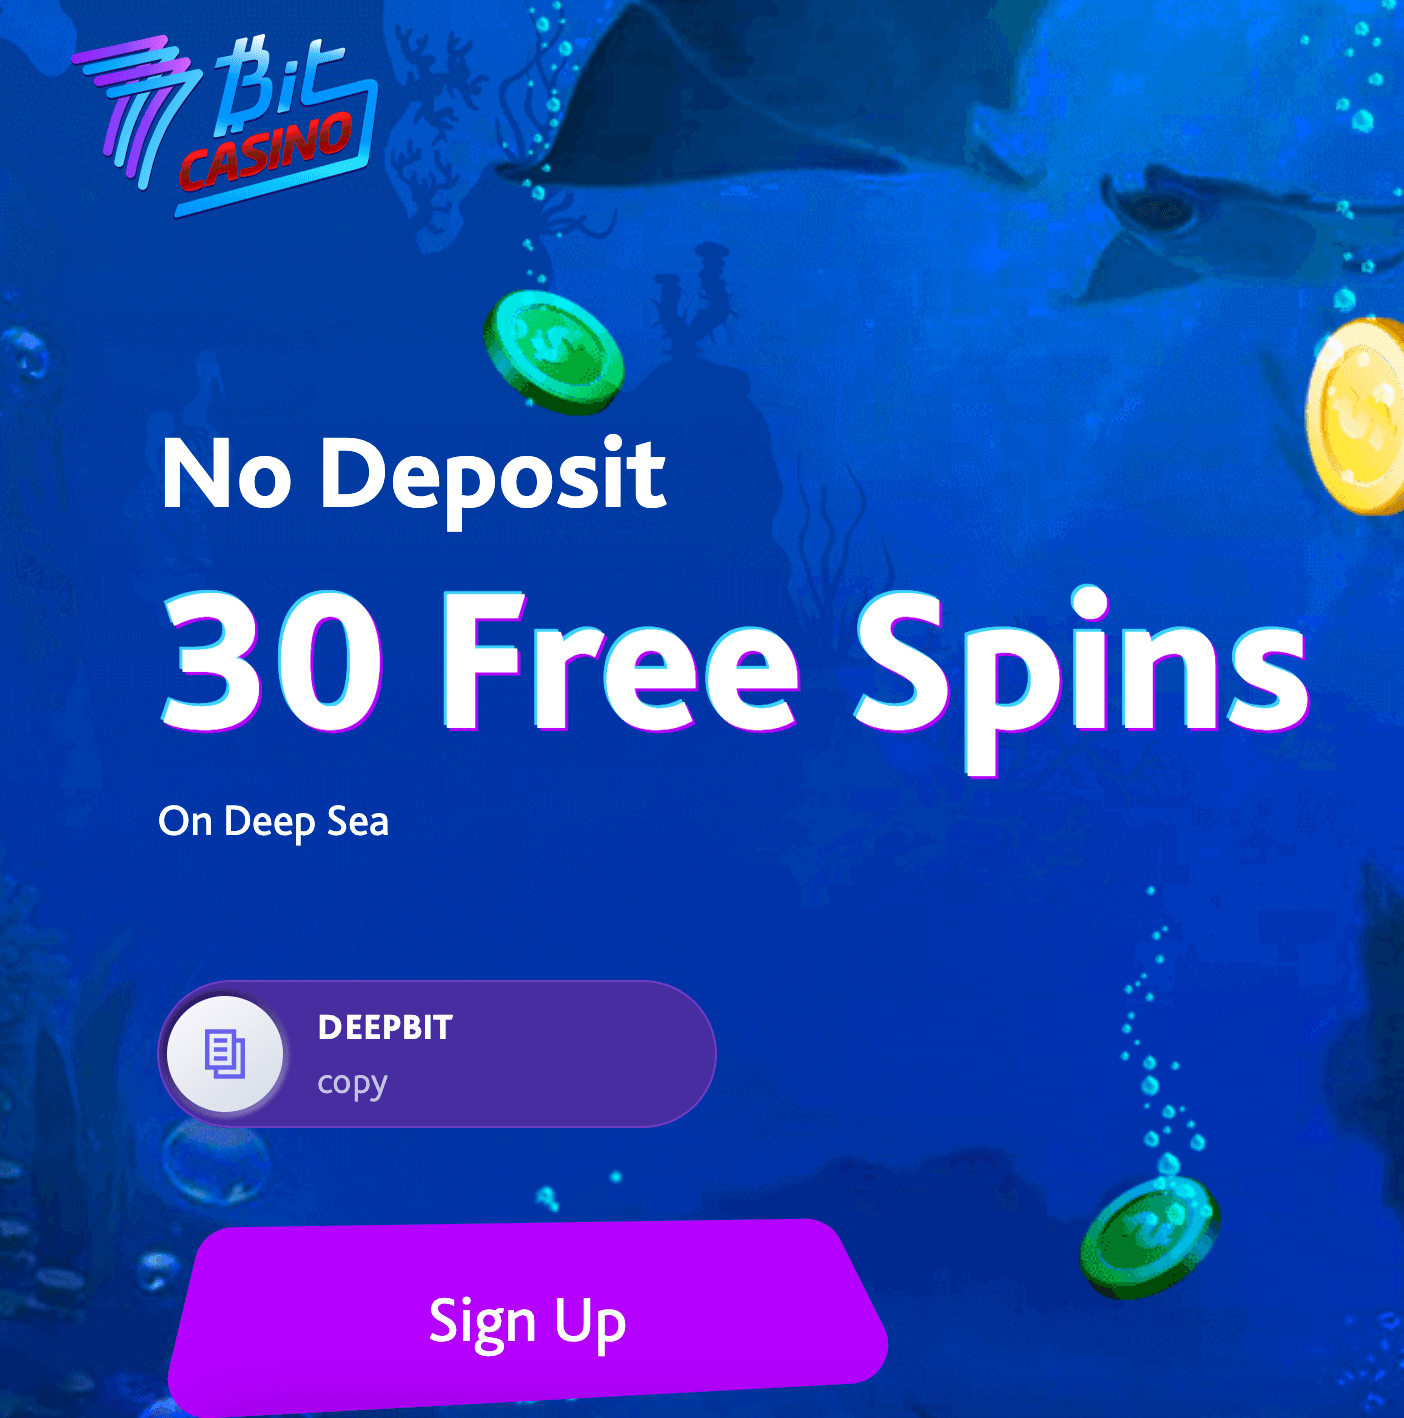 7bit casino depoit bonus code